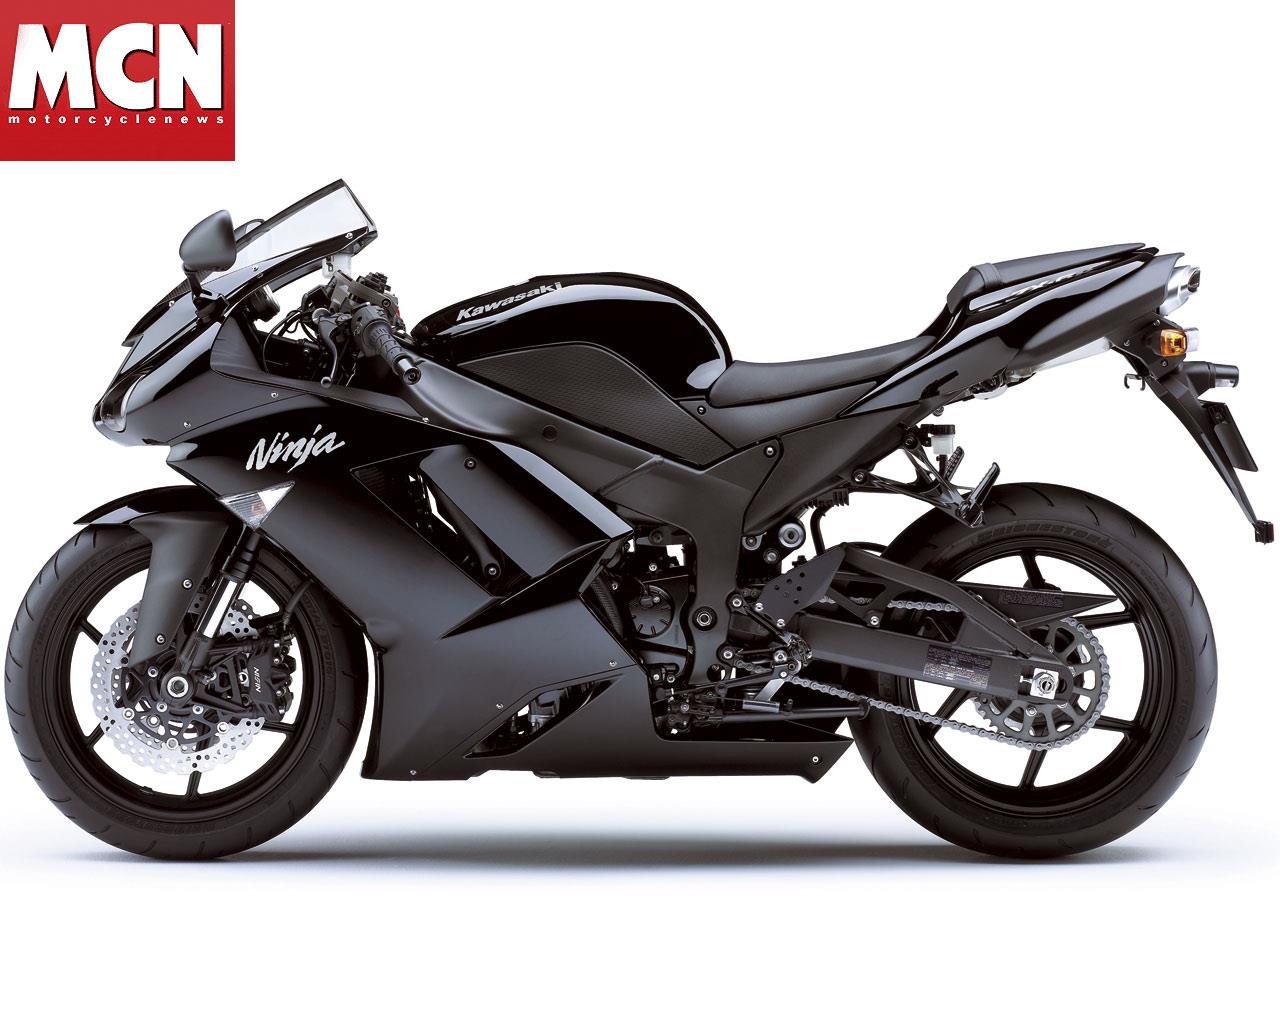 pecho Gama de Interpretativo Colour changes for the 2008 Kawasaki ZX-6R motorcycle | MCN